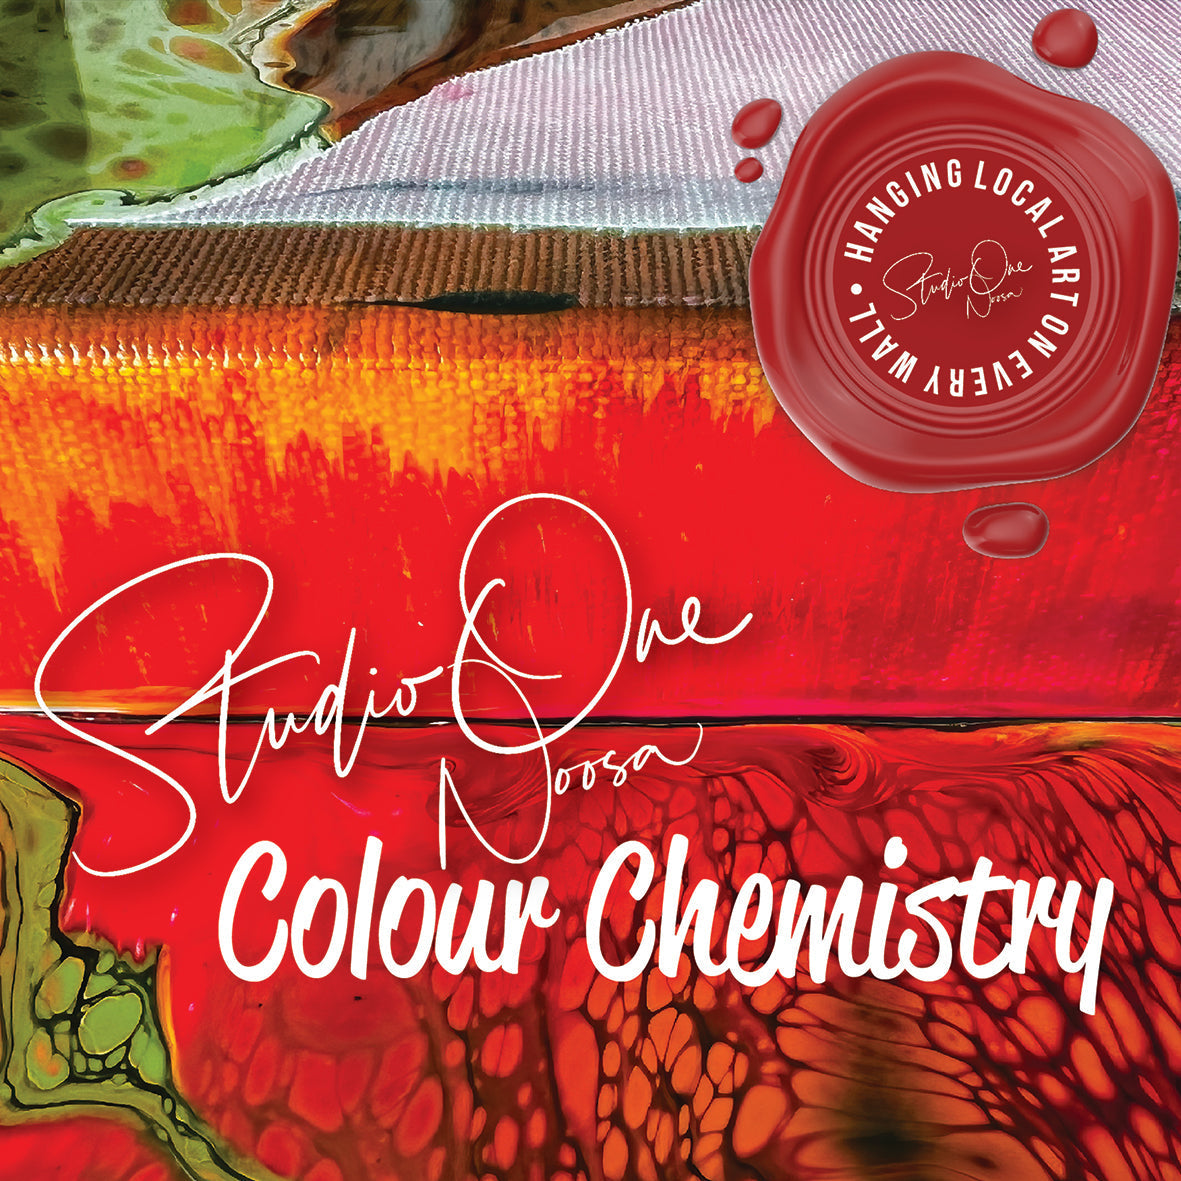 22nd March 24 - Sip & Pour  - Colour Chemistry Workshop - 5:30PM to 8:00PM